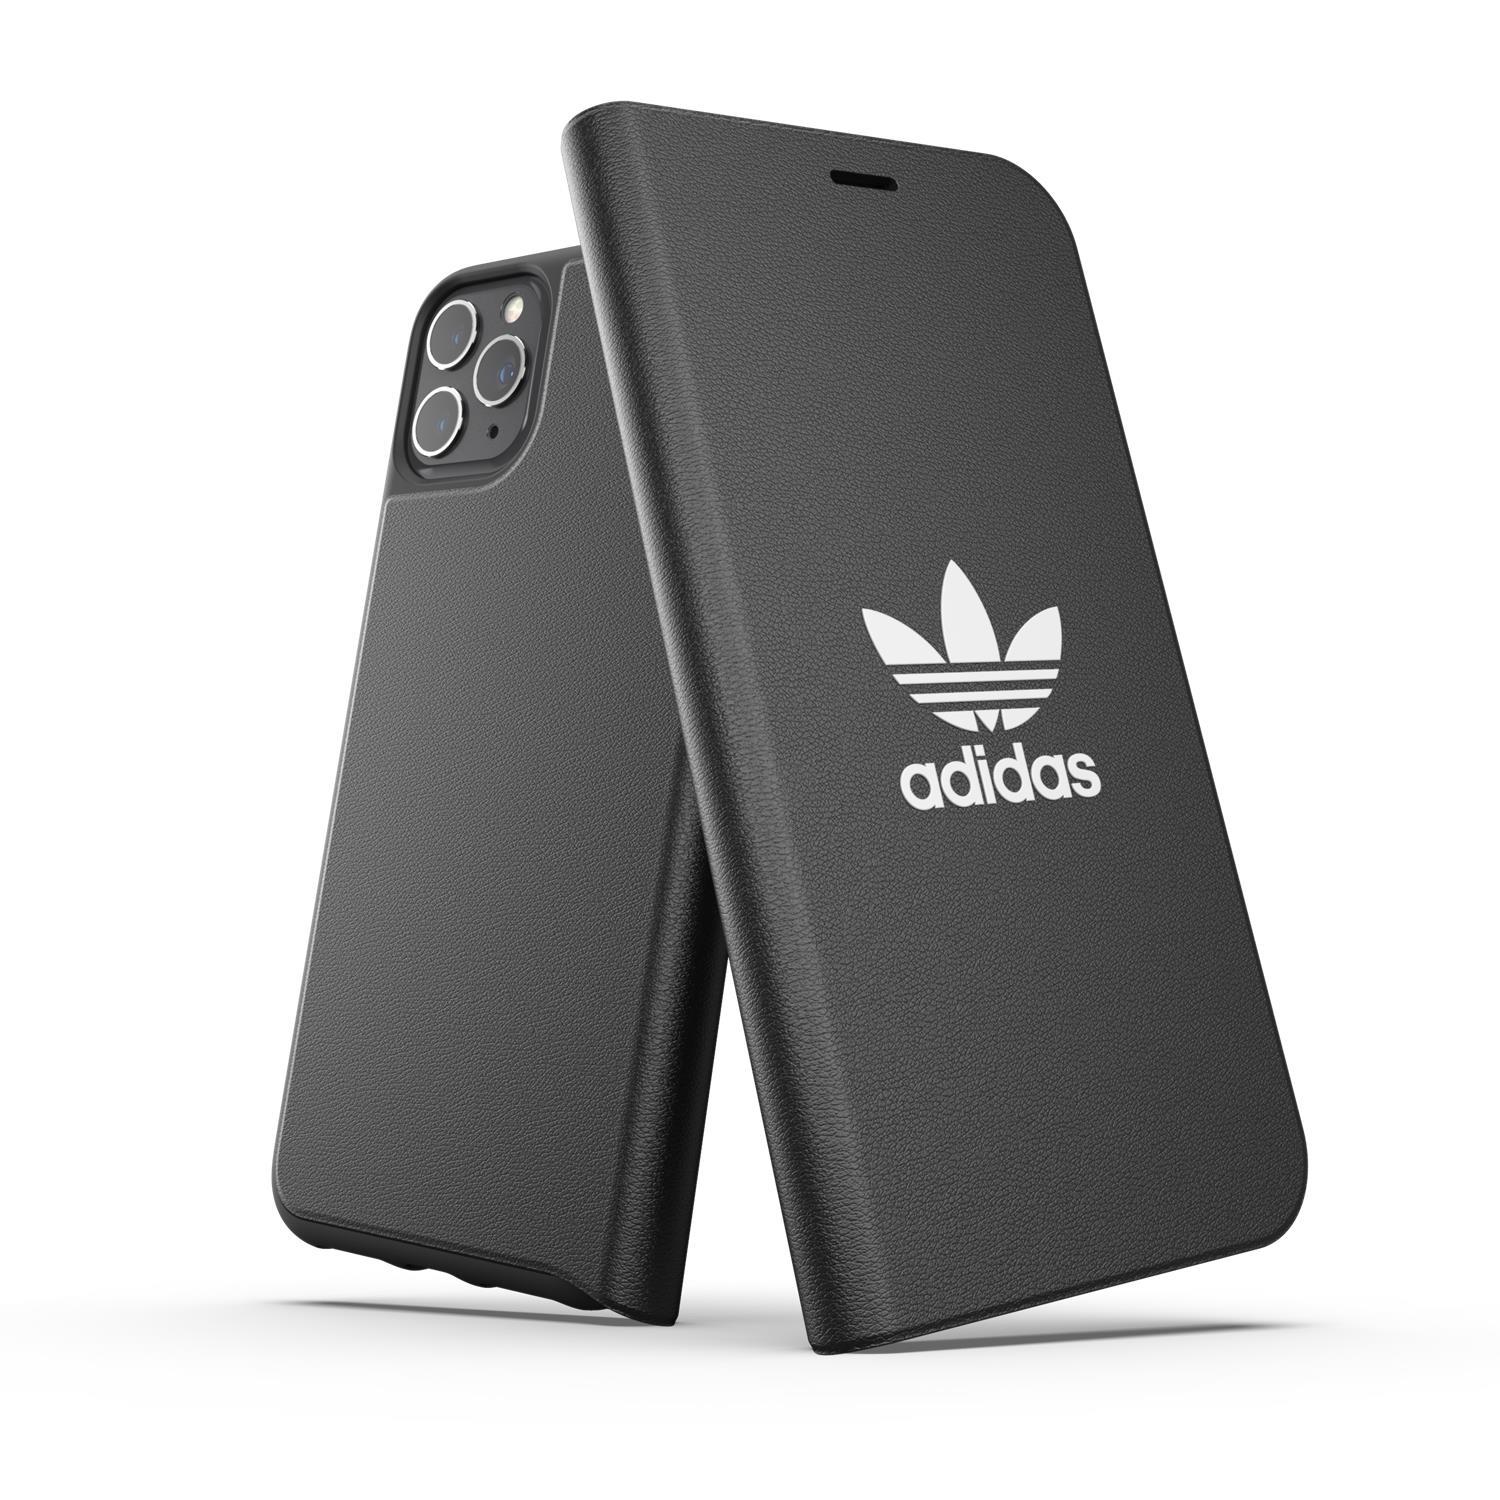 adidas OR Booklet Case Basic für iPhone 11 Pro Max black/white